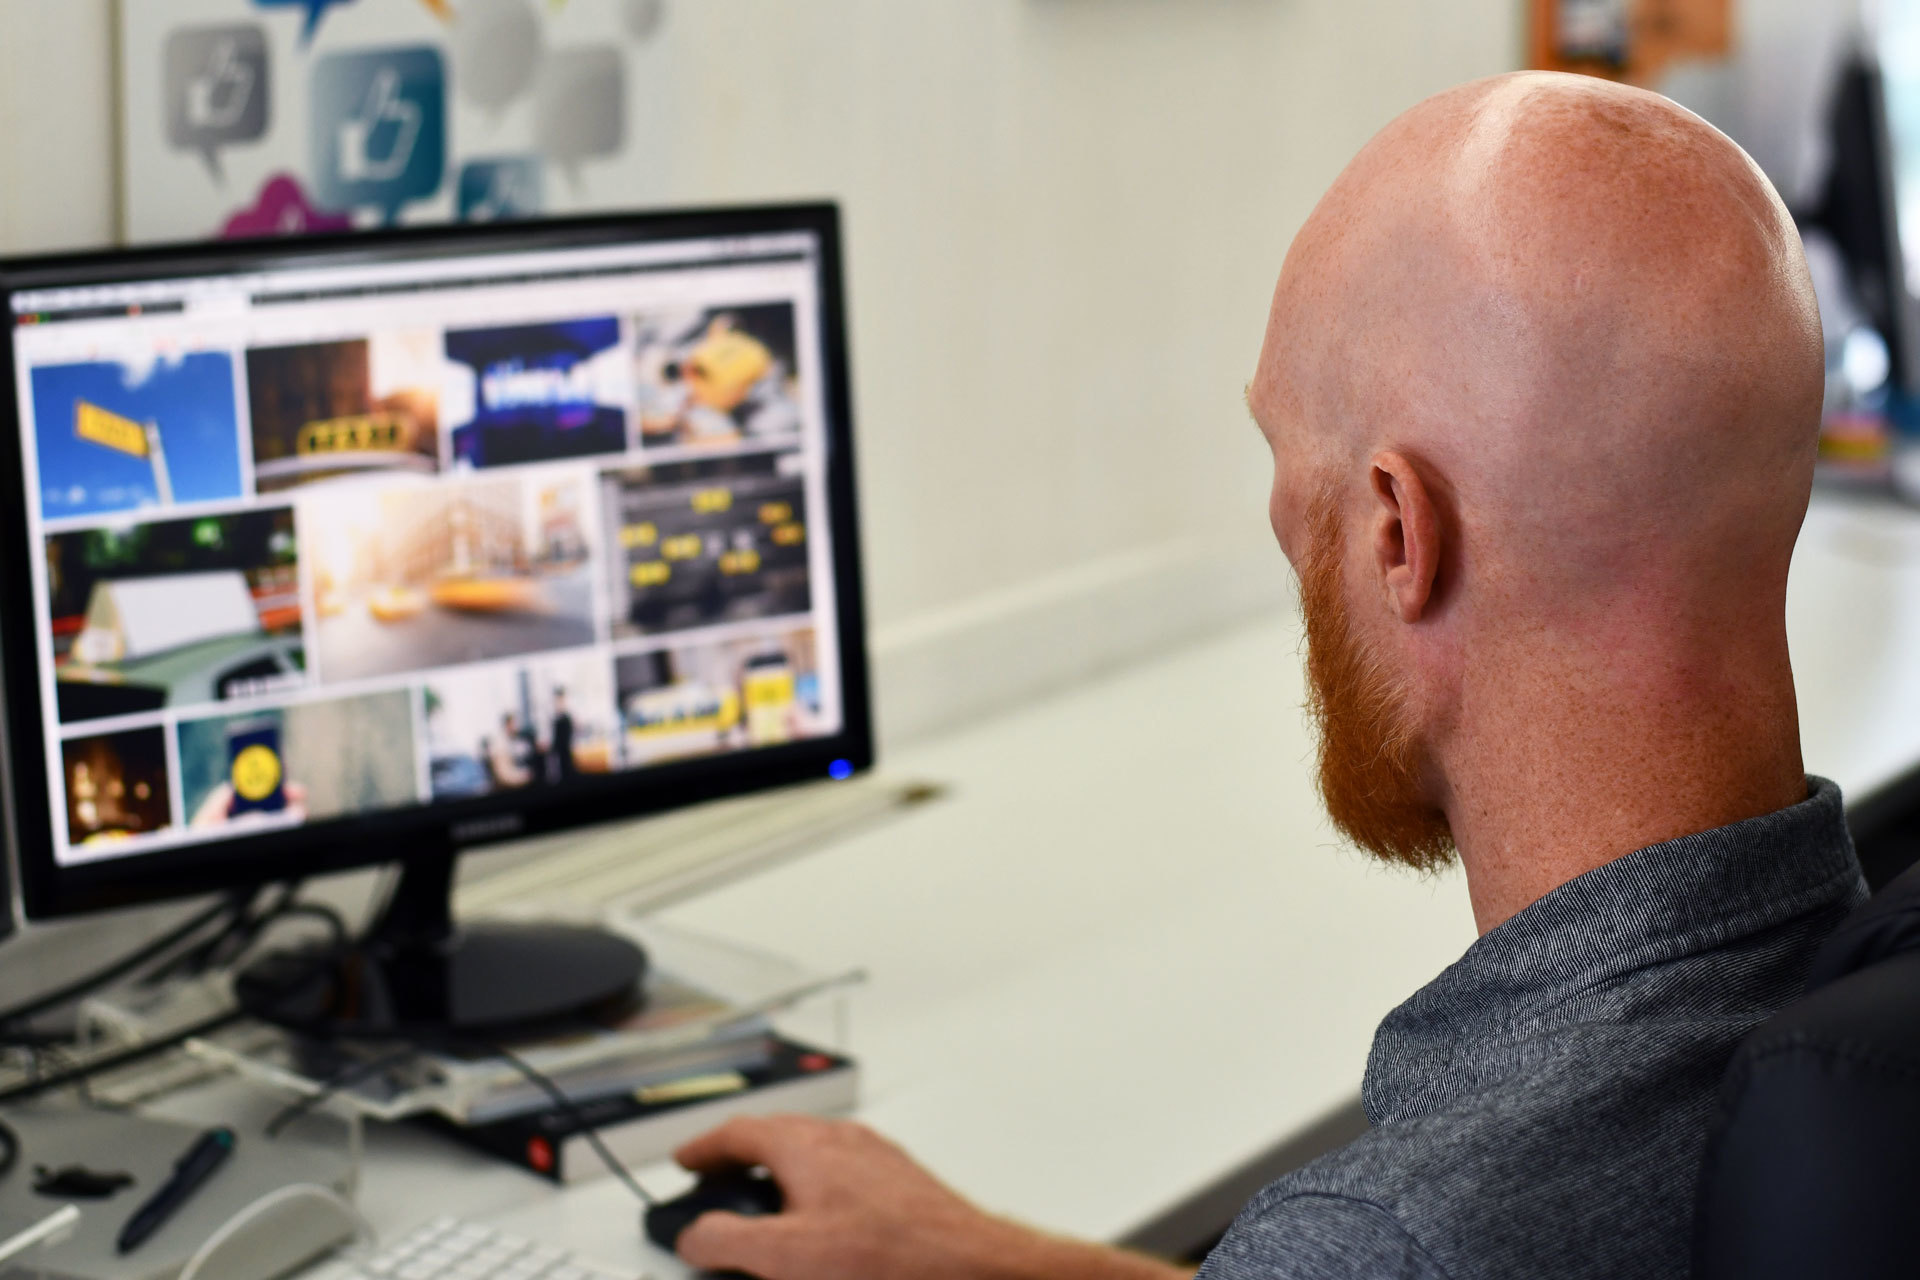 A web designer sat at his desk, creating a new website design on his computer